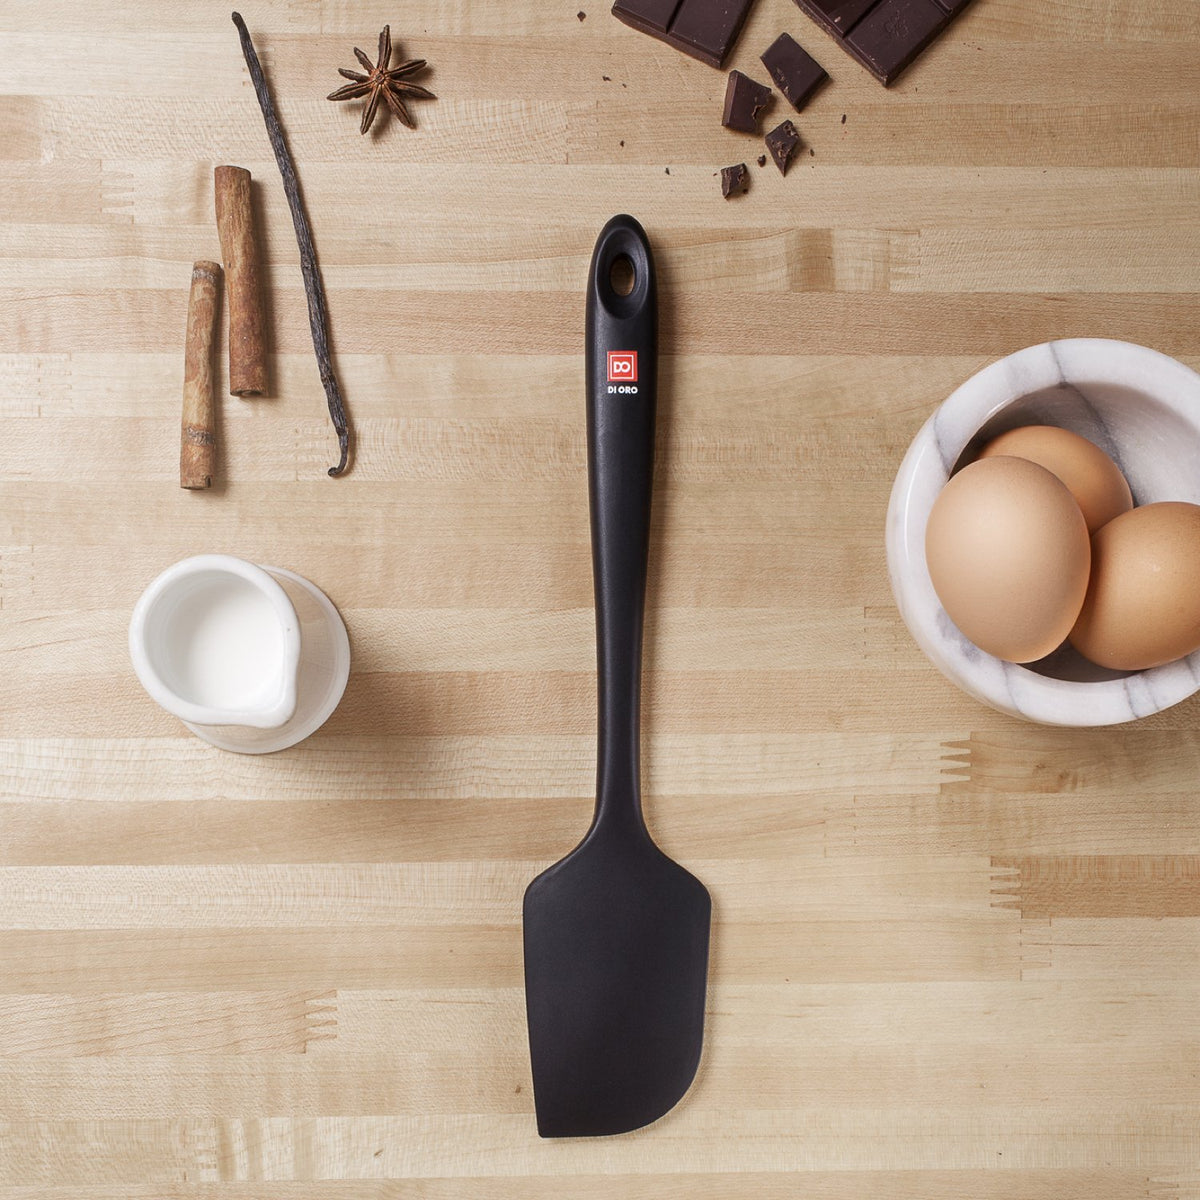 di Oro Living di oro silicone turner spatula set - kitchen spatulas for nonstick  cookware - cooking utensils for flipping eggs & pancakes 